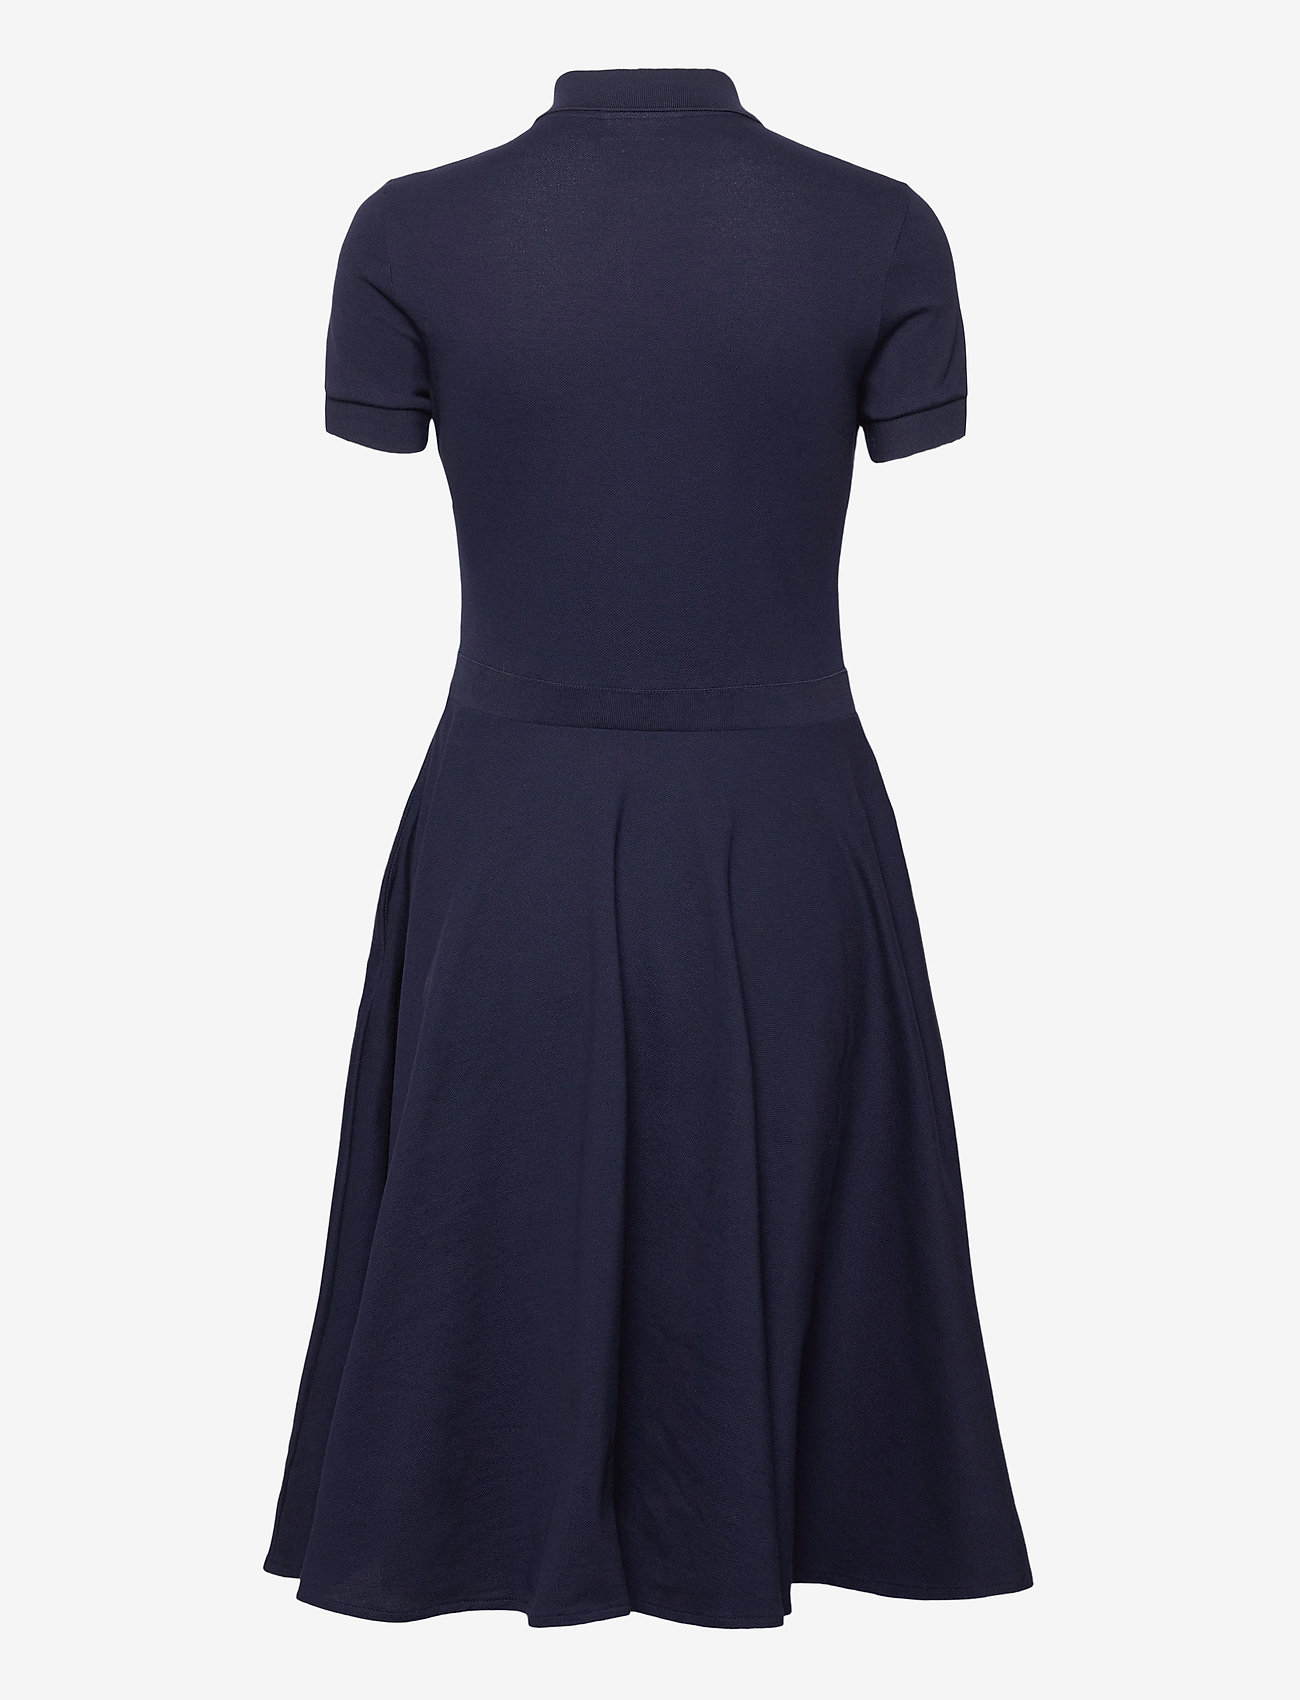 Lacoste Dresses - Midi dresses | Boozt.com